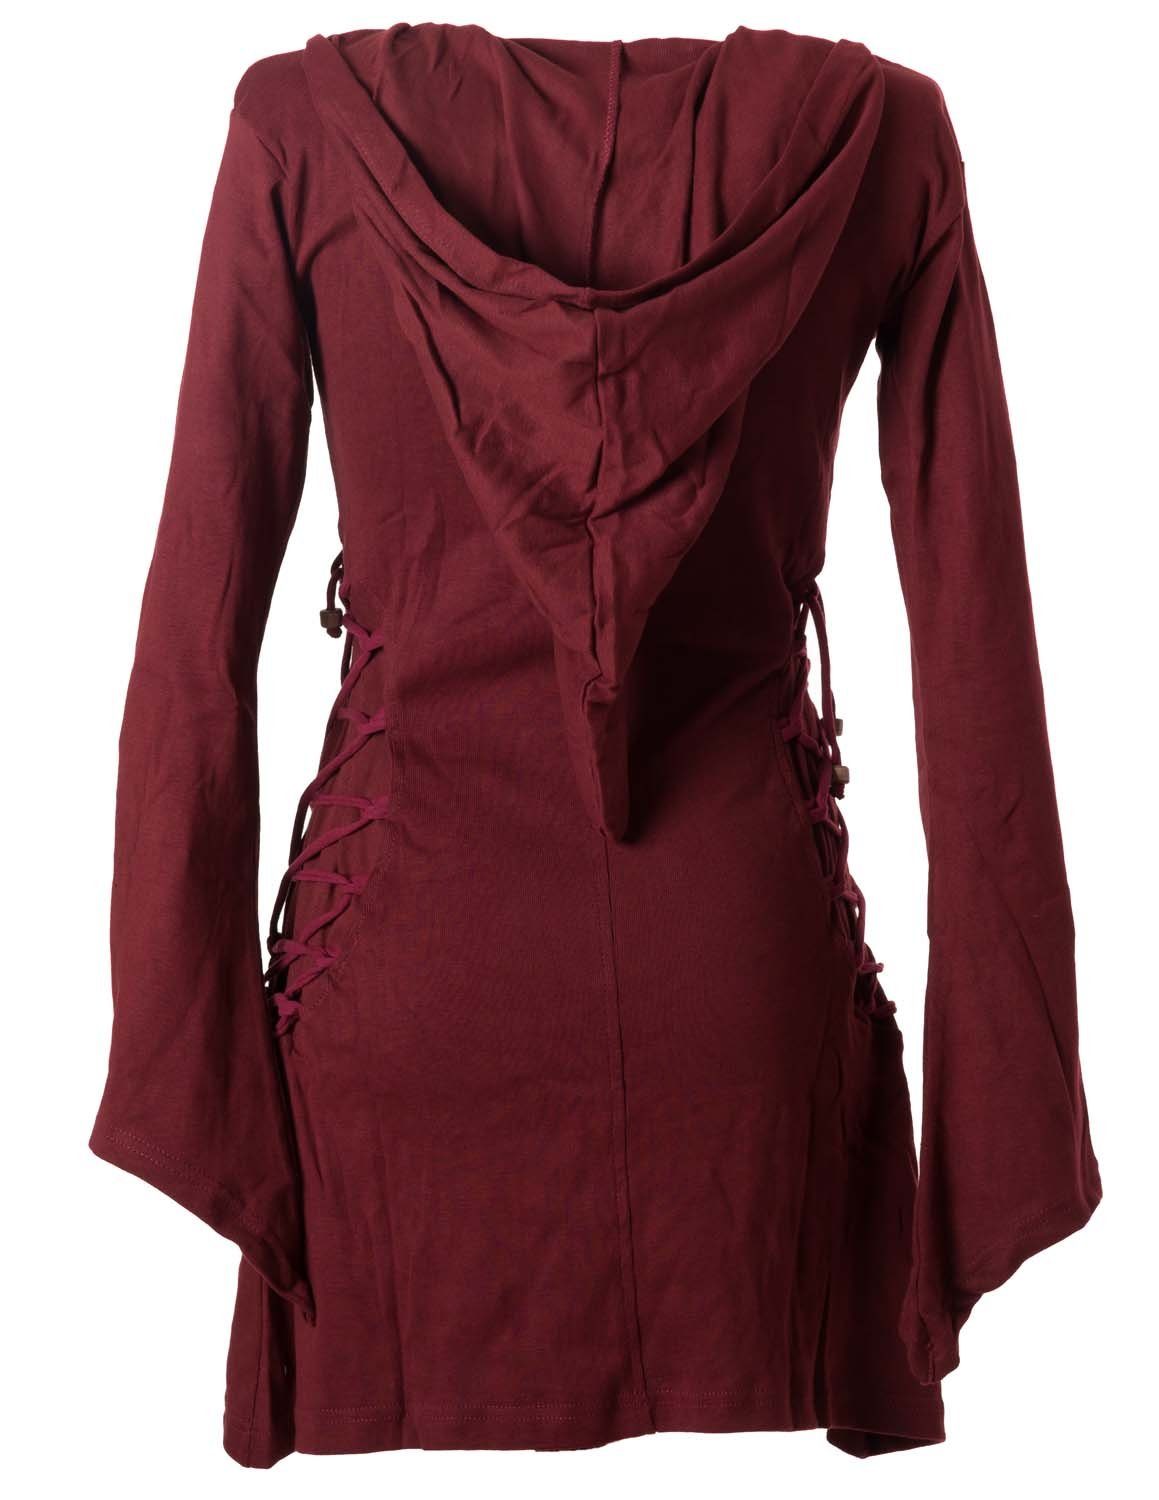 Vishes Zipfelkleid Elfenkleid mit dunkelrot Ethno, Hoody, zum Gothik Schnüren Style Zipfelkapuze Bändern